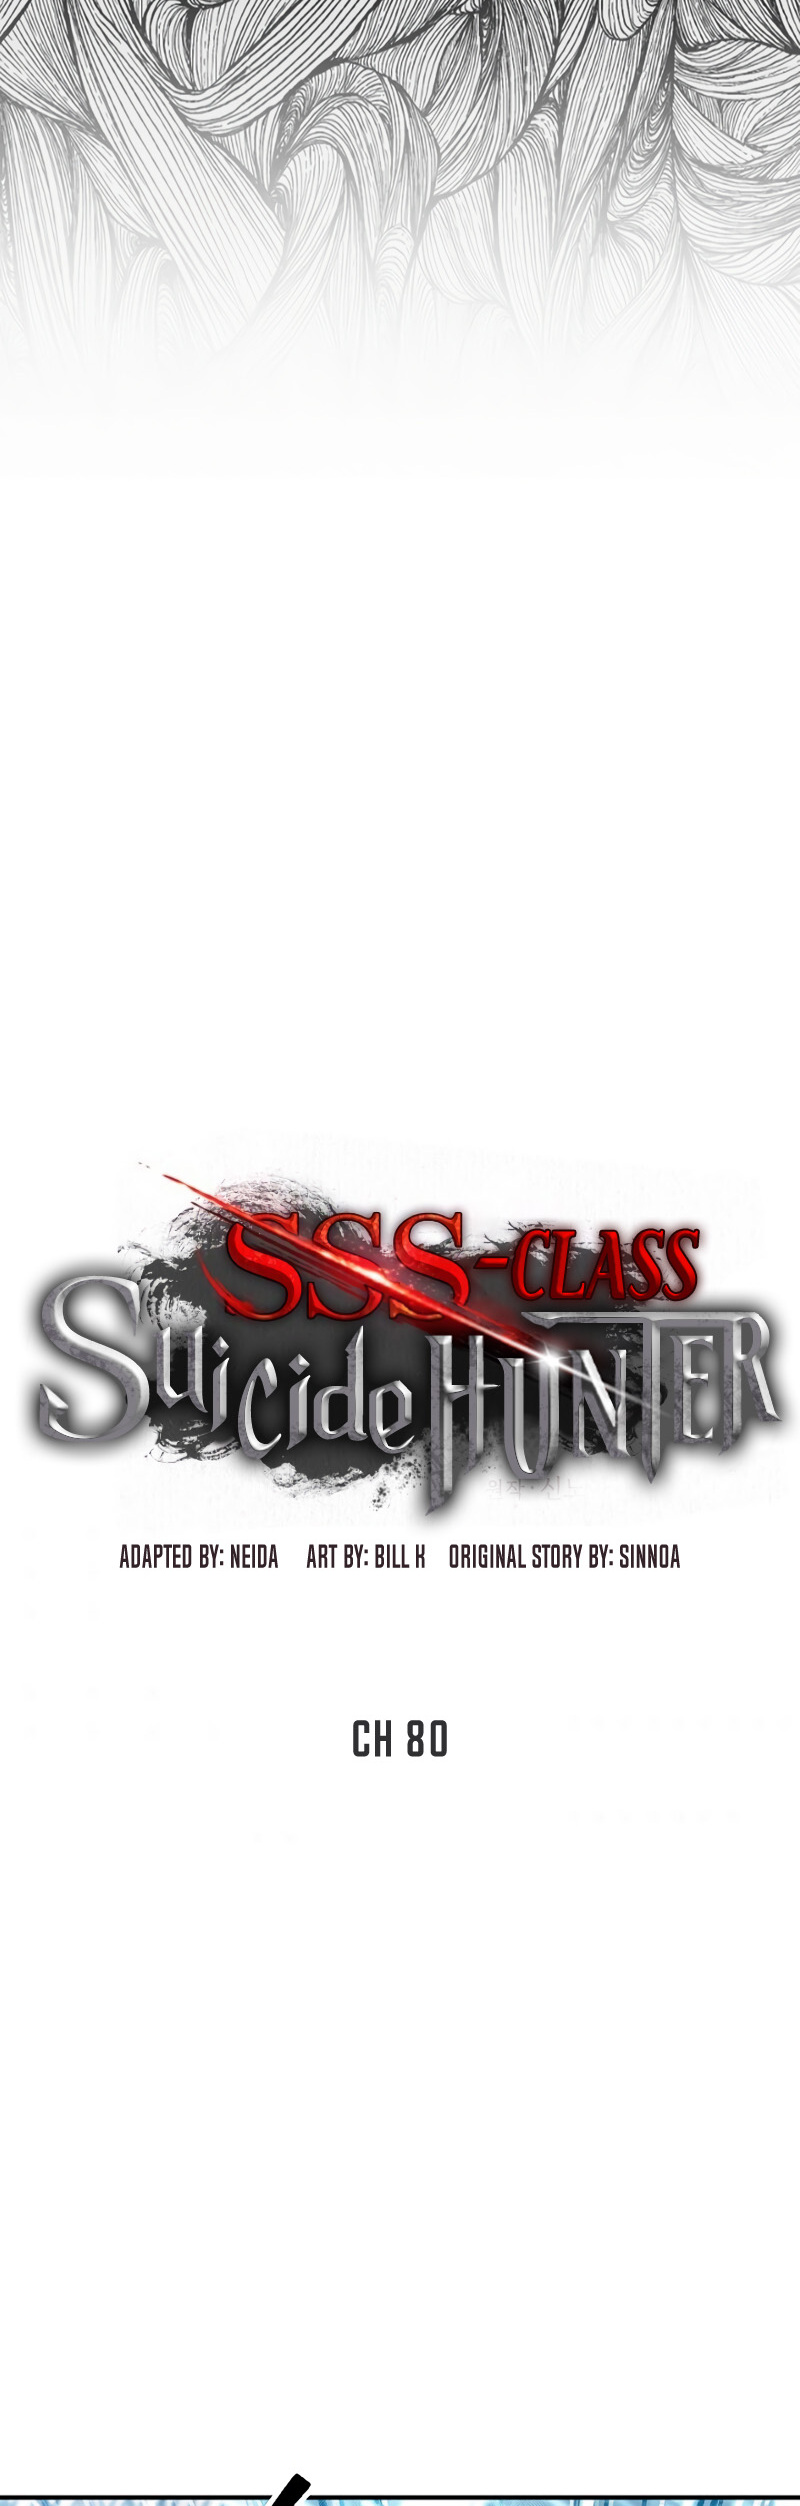 SSS-Class Suicide Hunter 80